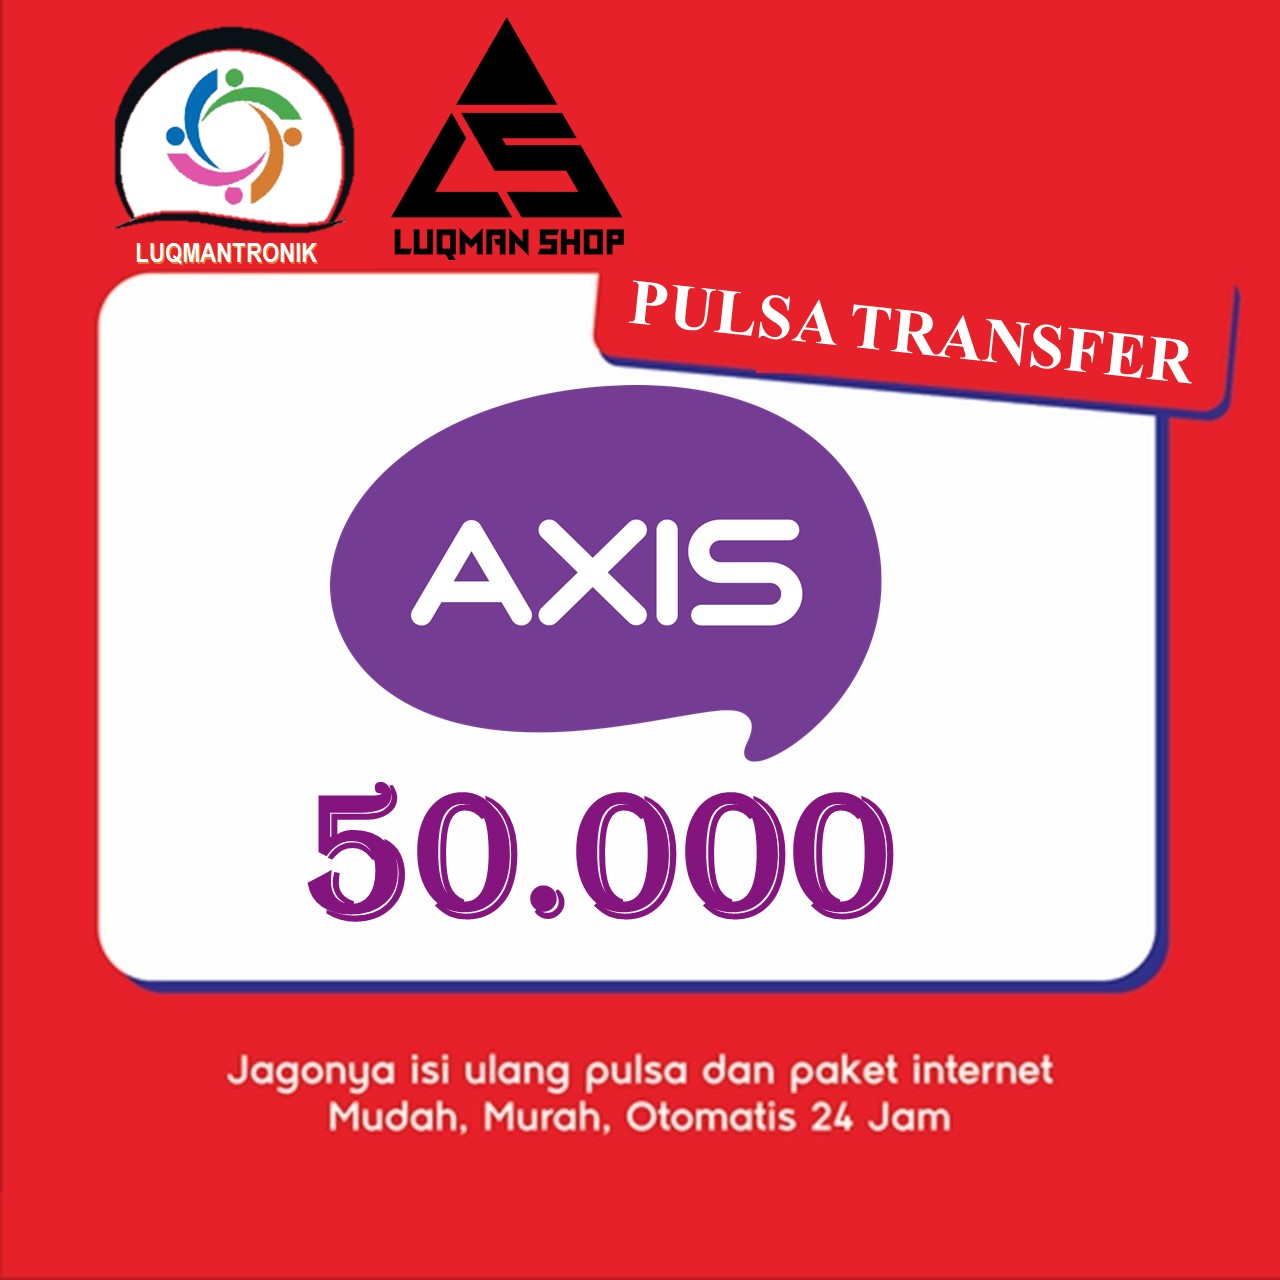 PULSA TRANSFER AXIS - PULSA TRANSFER AXIS 50.000